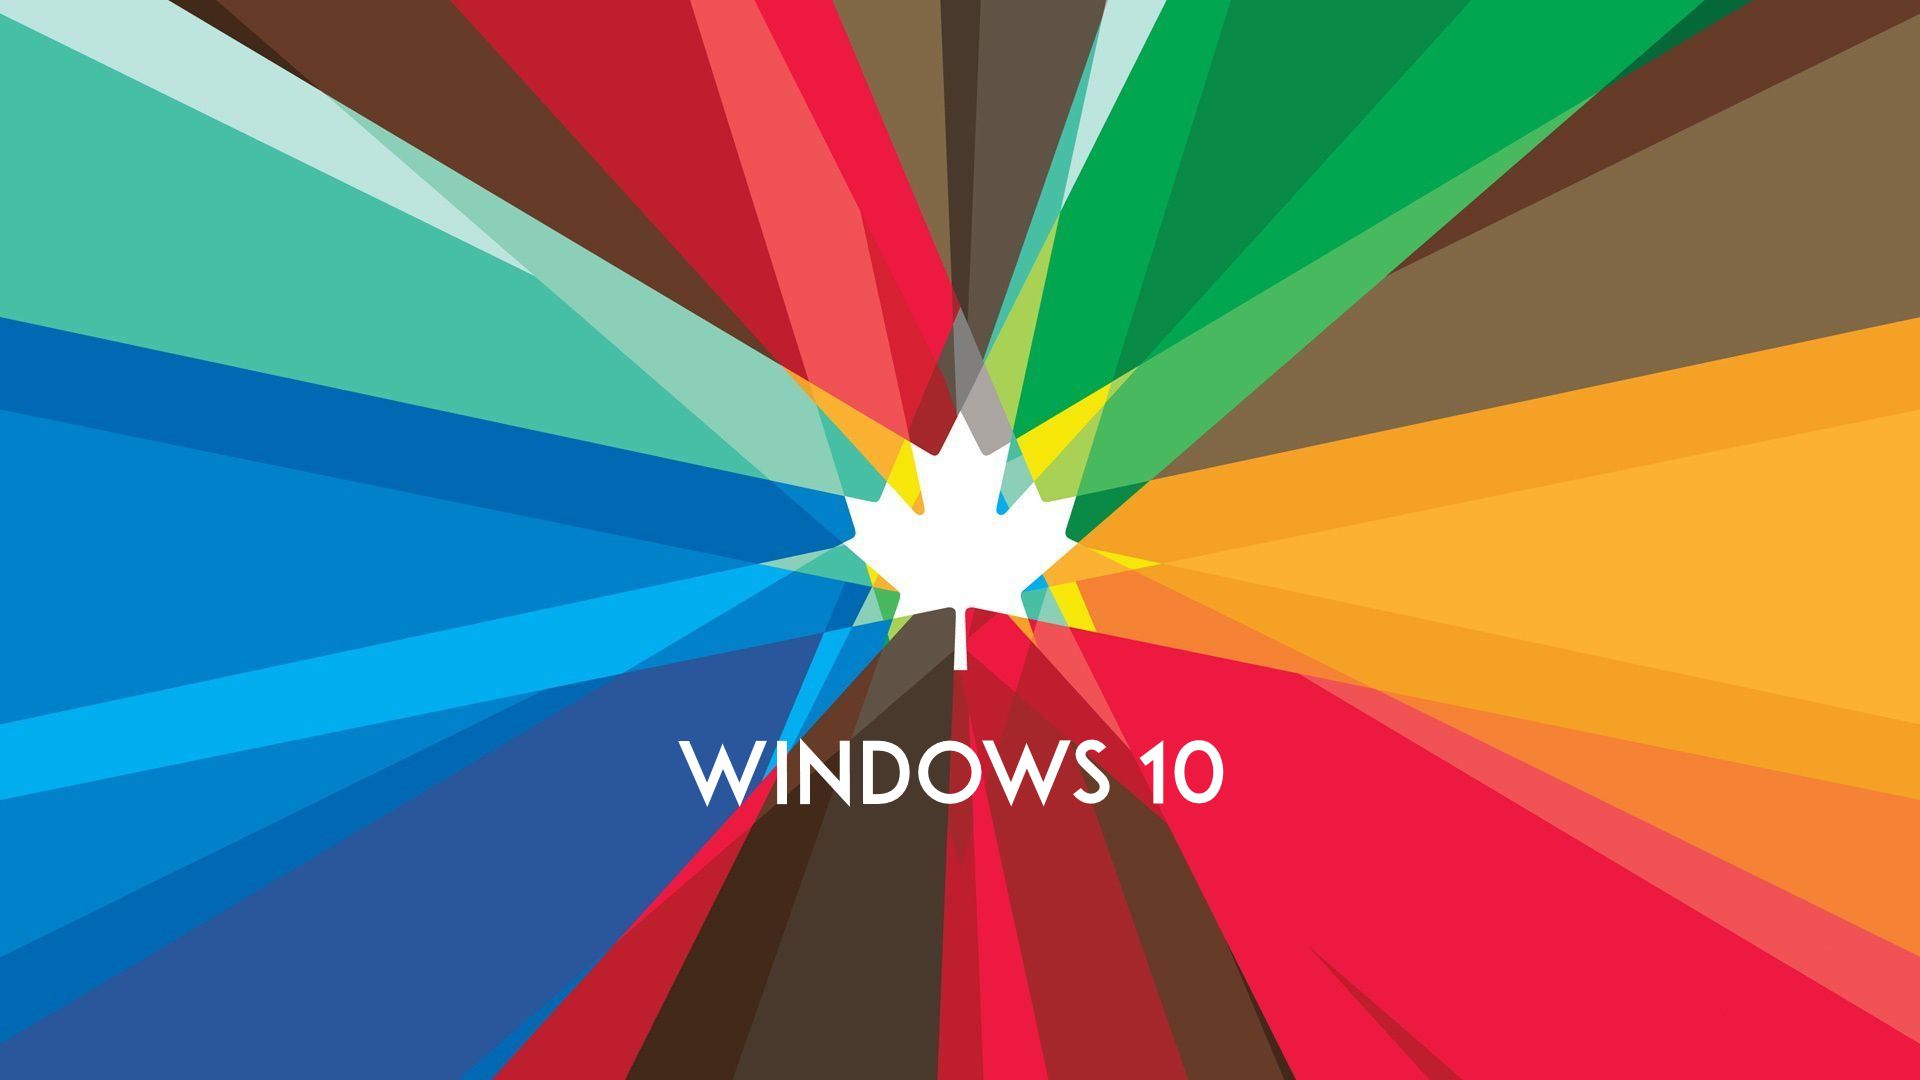 Windows 10 Wallpaper Hd 1920x1080 Nature Landscape